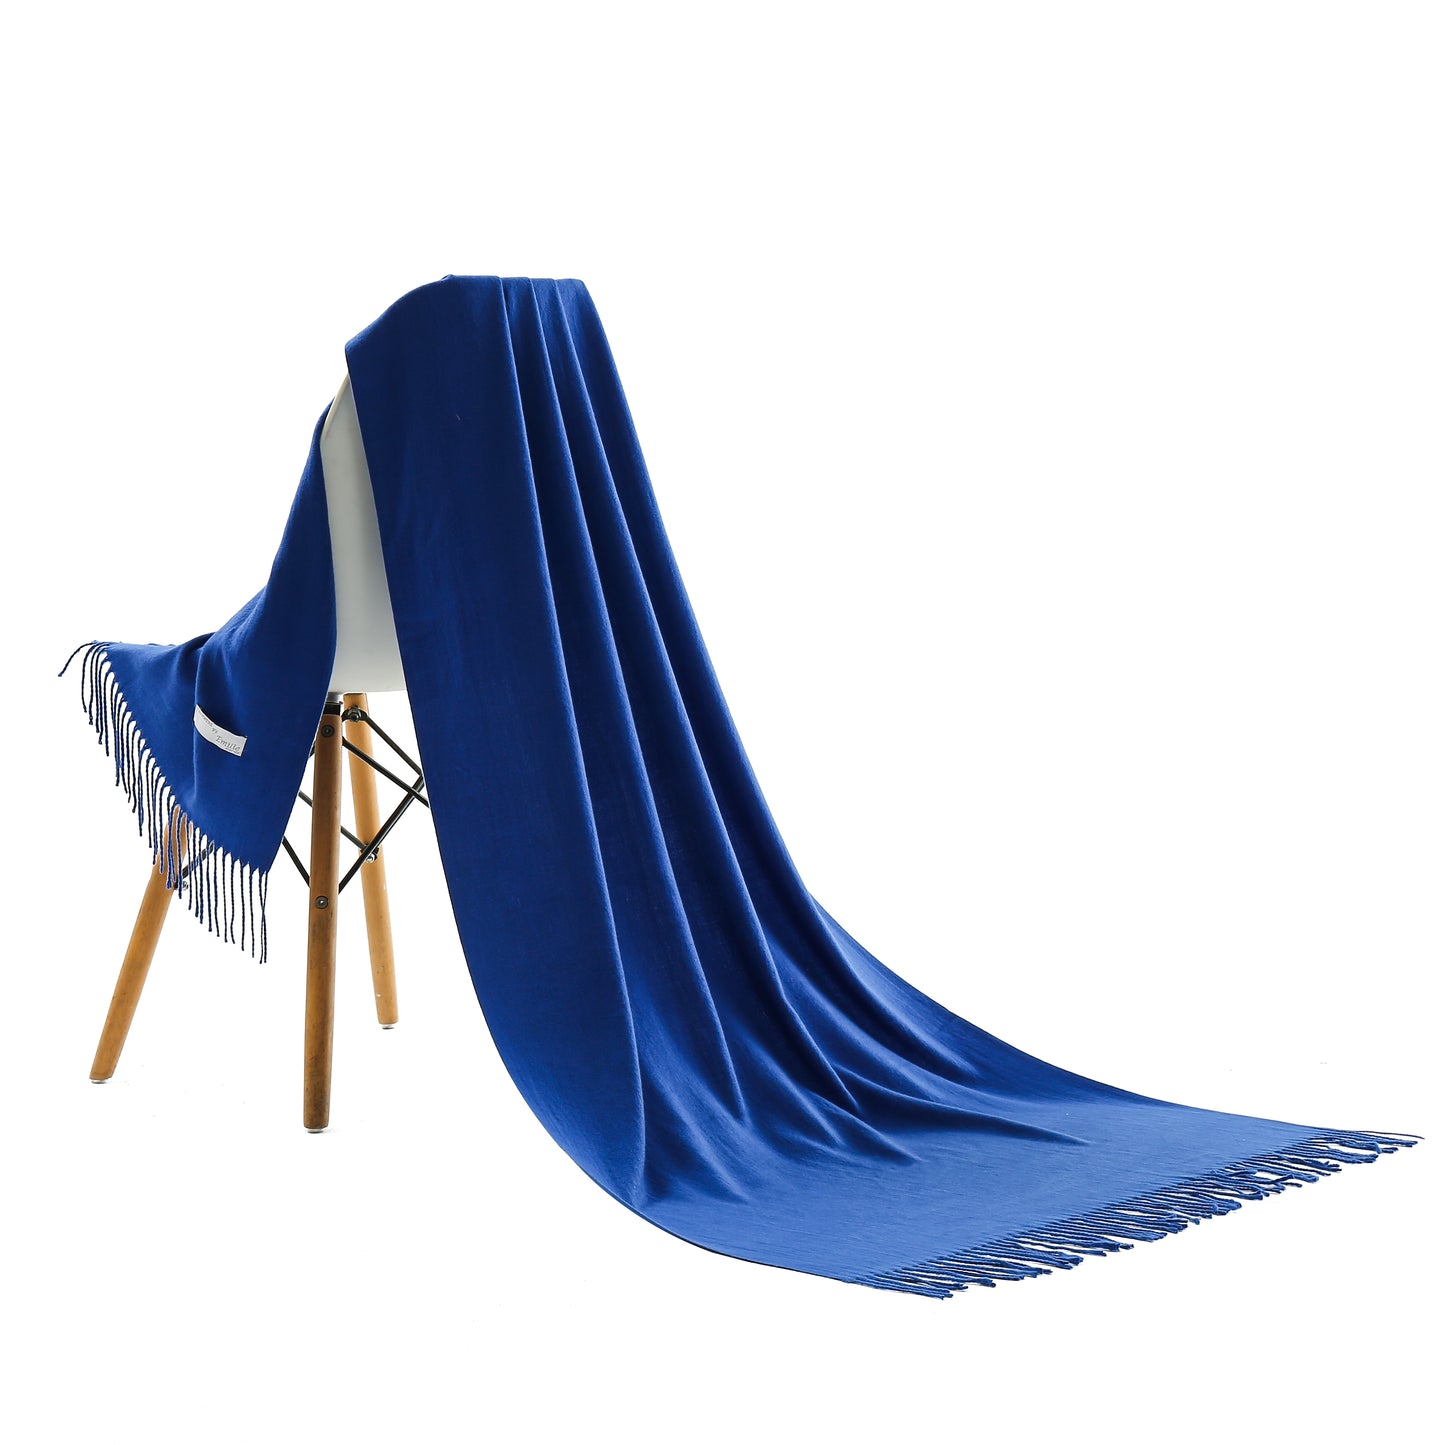 Pashmina sjaal kobaltblauw